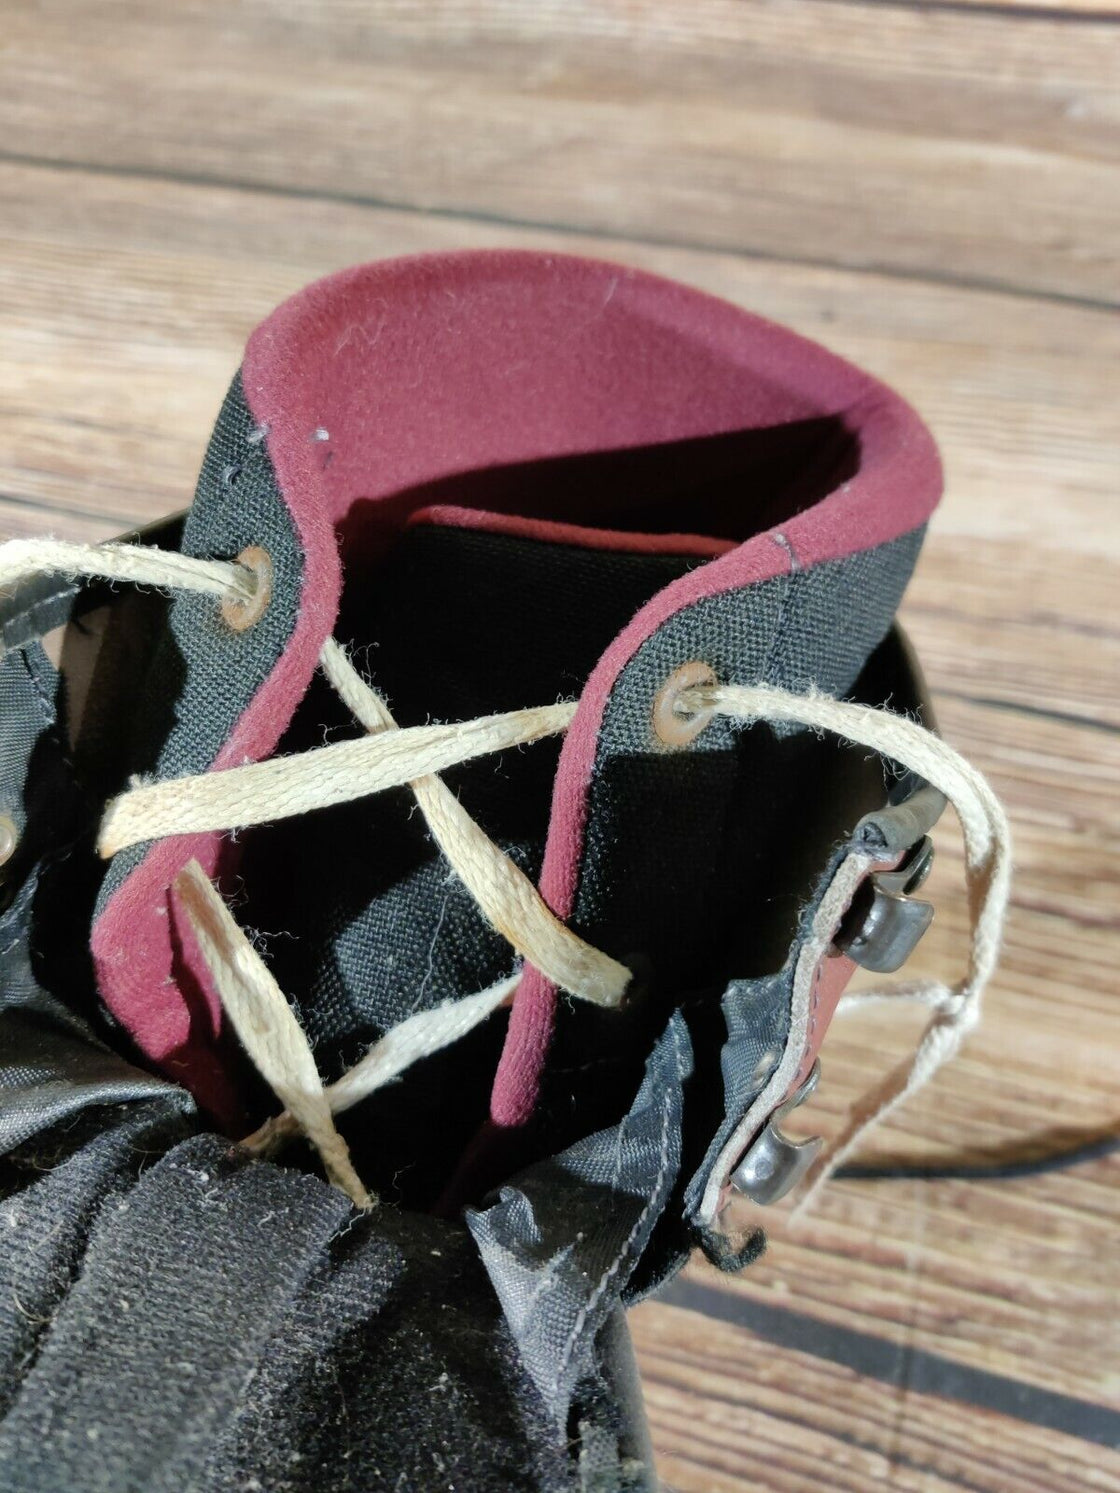 ASKEW Vintage Snowboard Boots Retro Size EU43, US9, UK8, Mondo 270 mm A